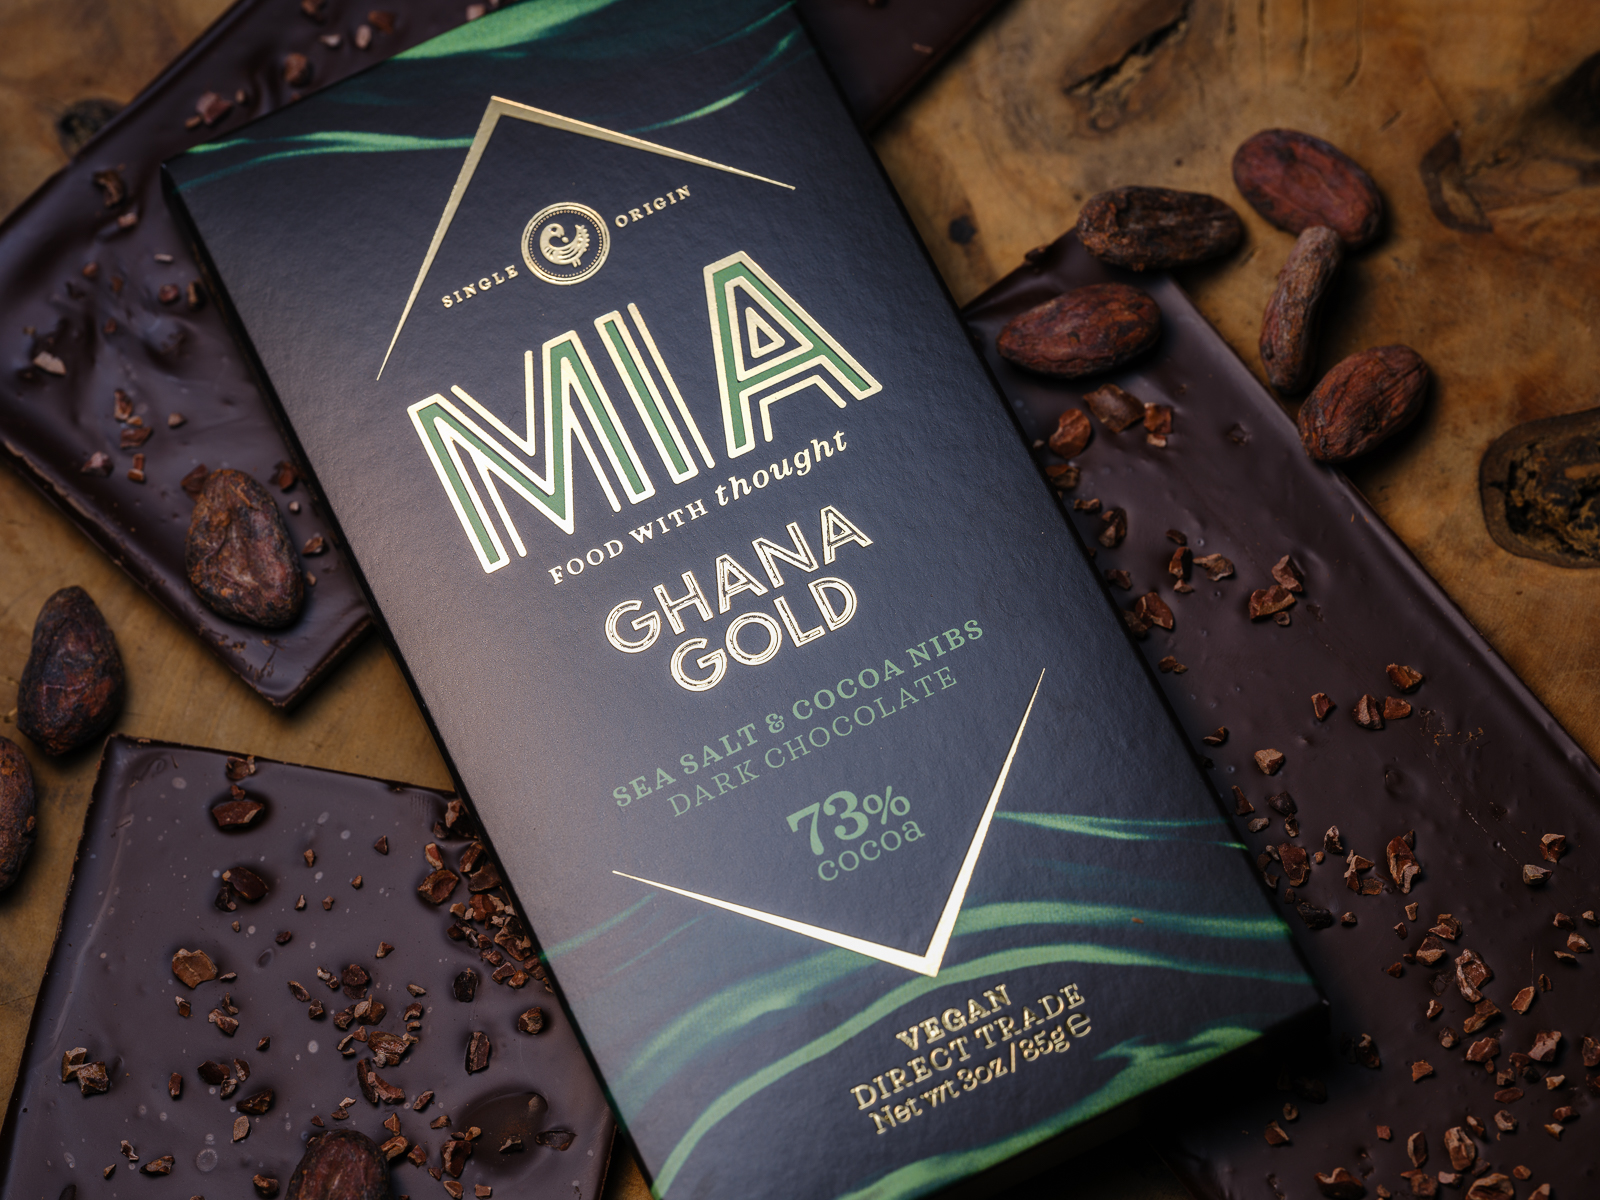 MIA Ghana Gold 73% Dark Chocolate Bar with Sea Salt & Cocoa Nibs Lifestyle